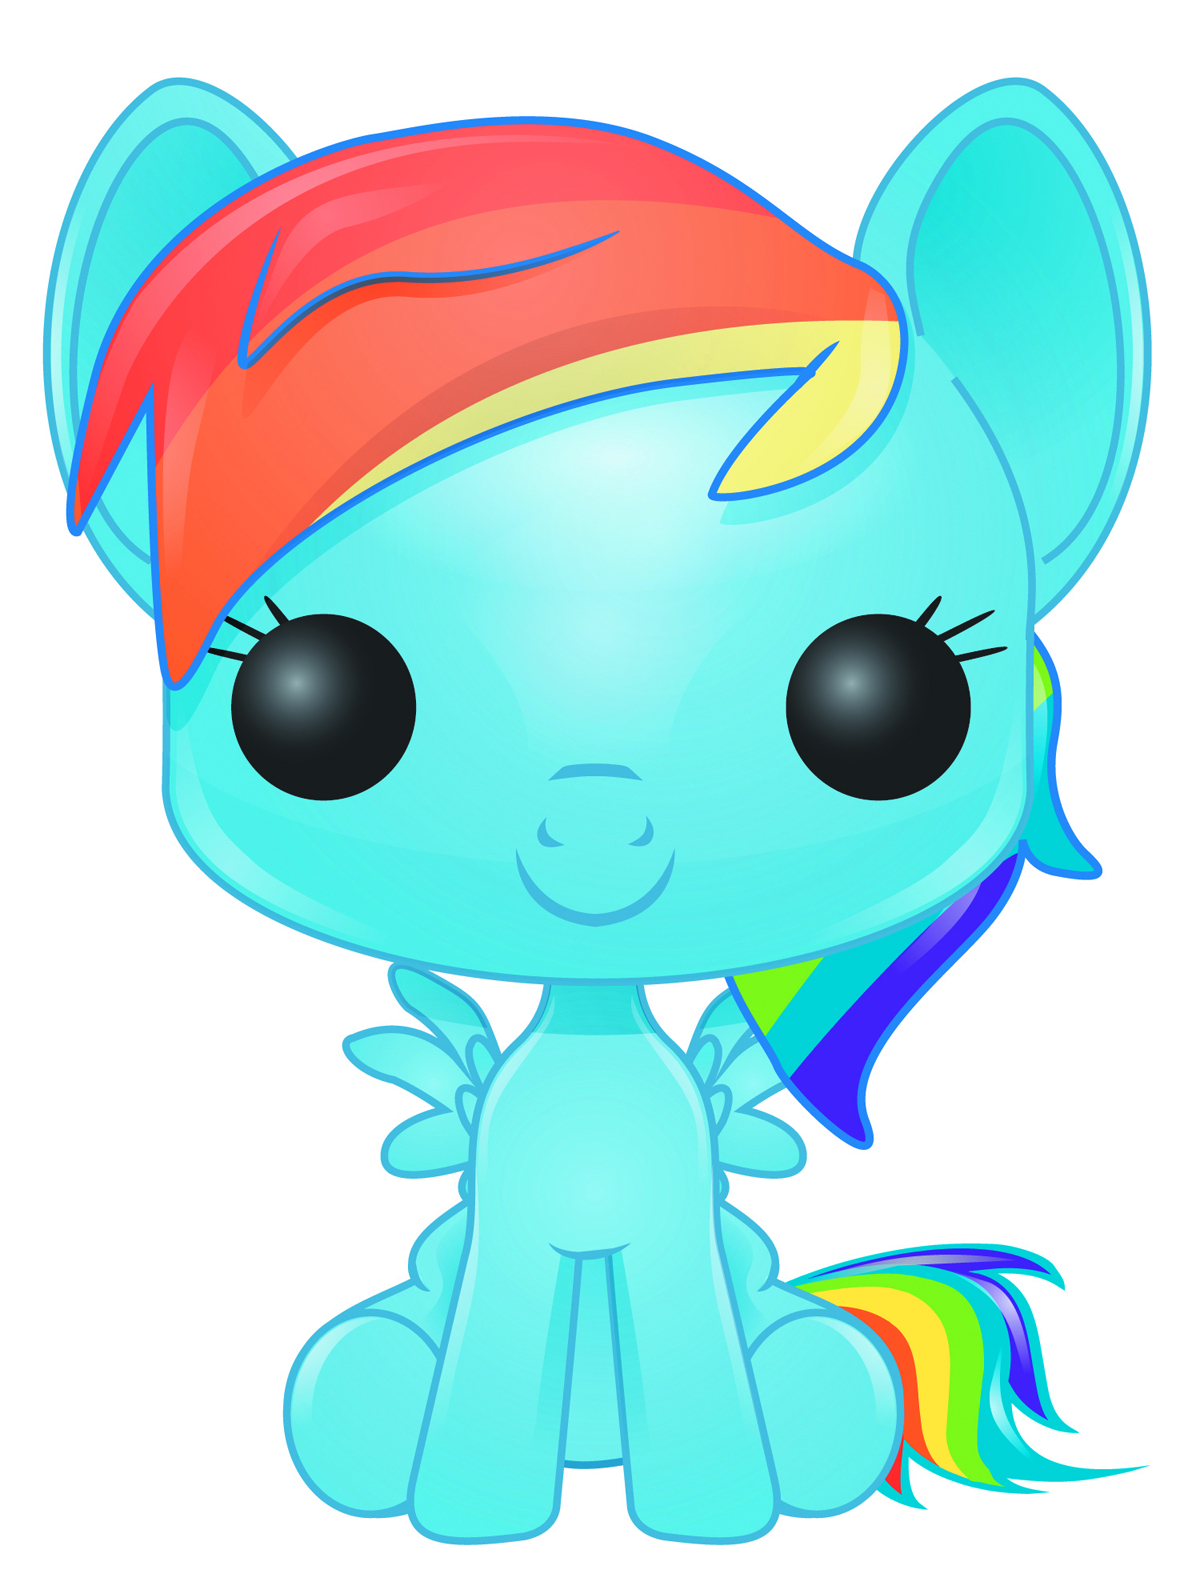 Funko My Little Pony: Rainbow Dash Vinyl Figure